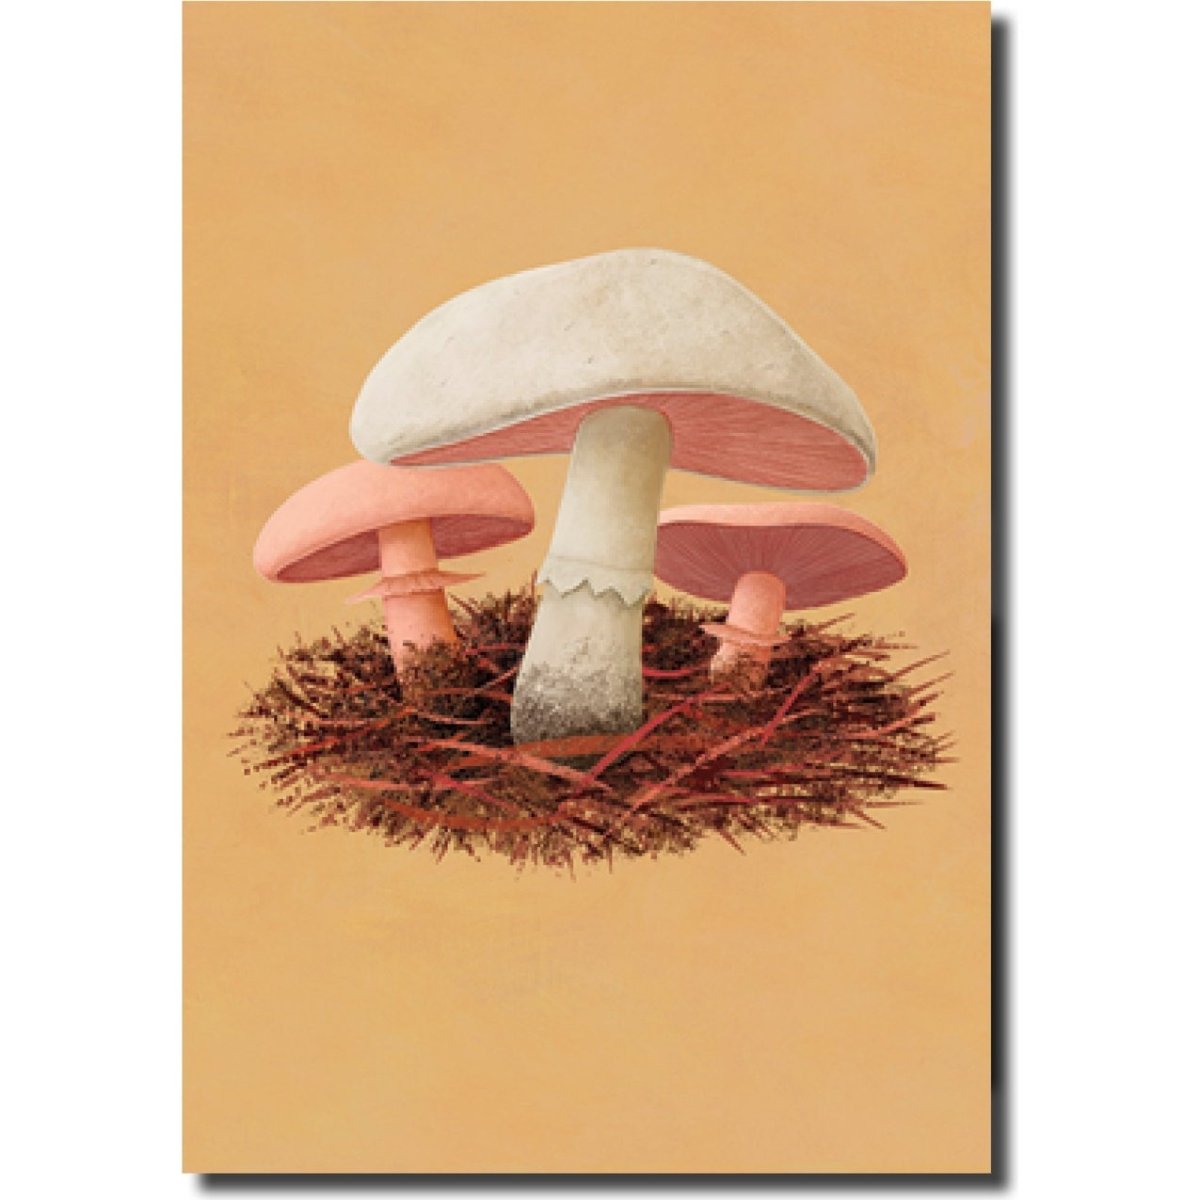 Pip Greeting Cards Mushrooms